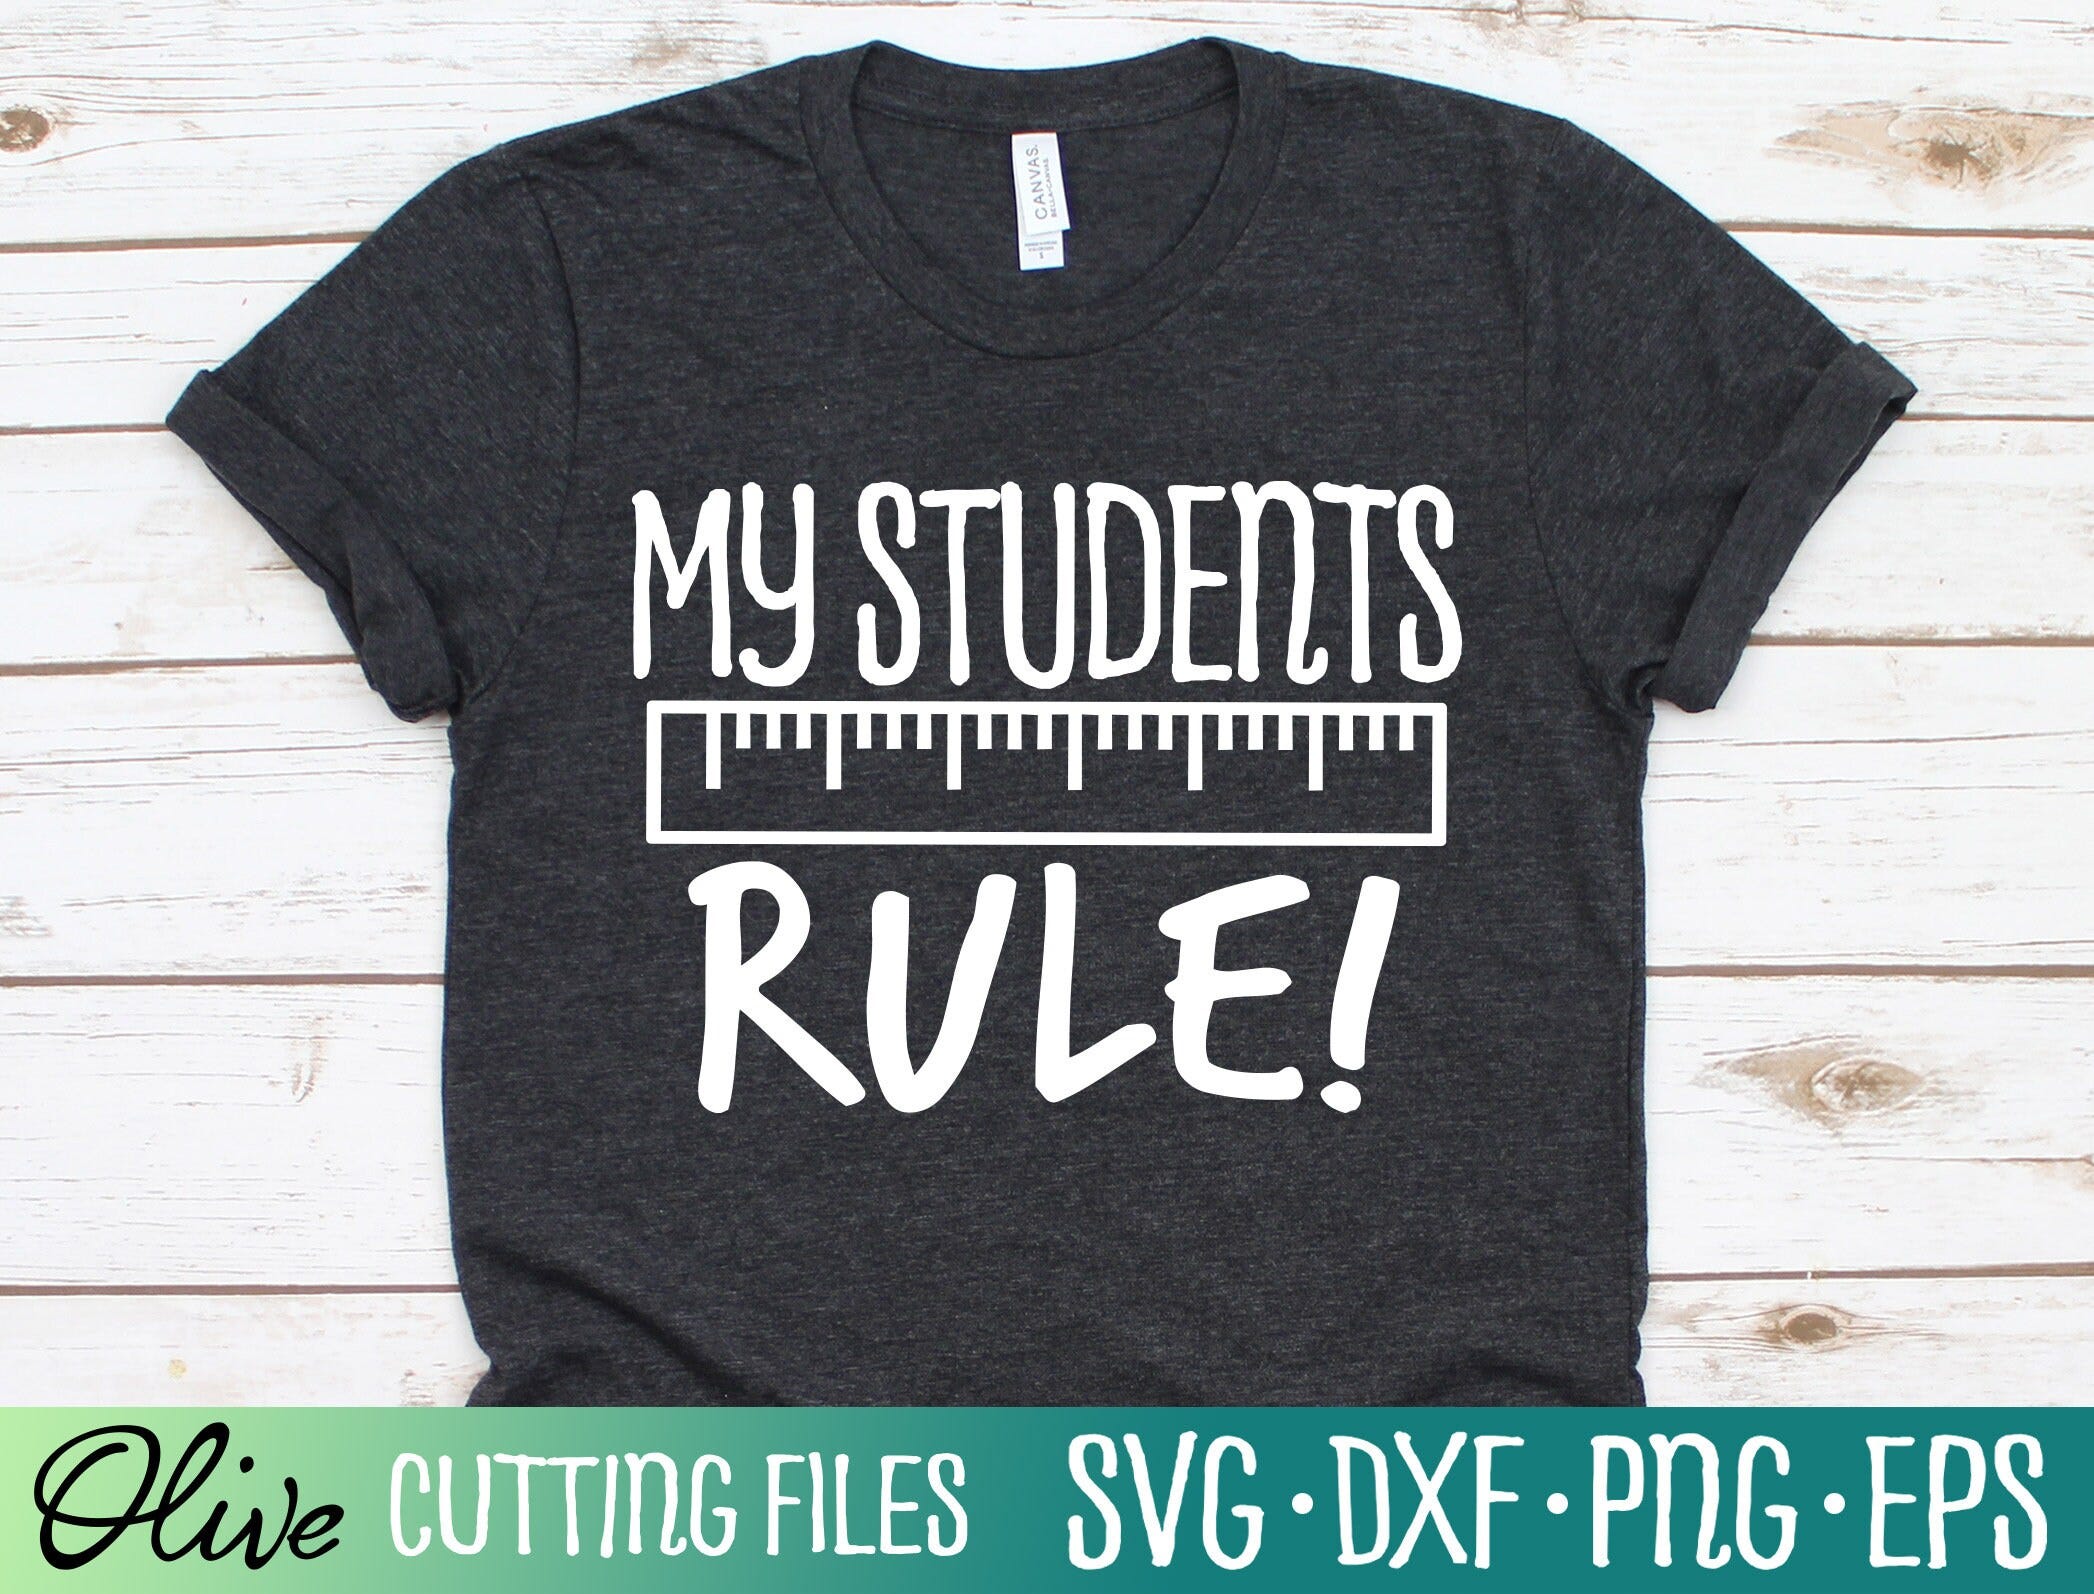 Funny Teacher SVG, Teacher SVG, My Students Rule SVG, Funny Classroom Silhouette Svg, Svg Files for Cricut, Cut File